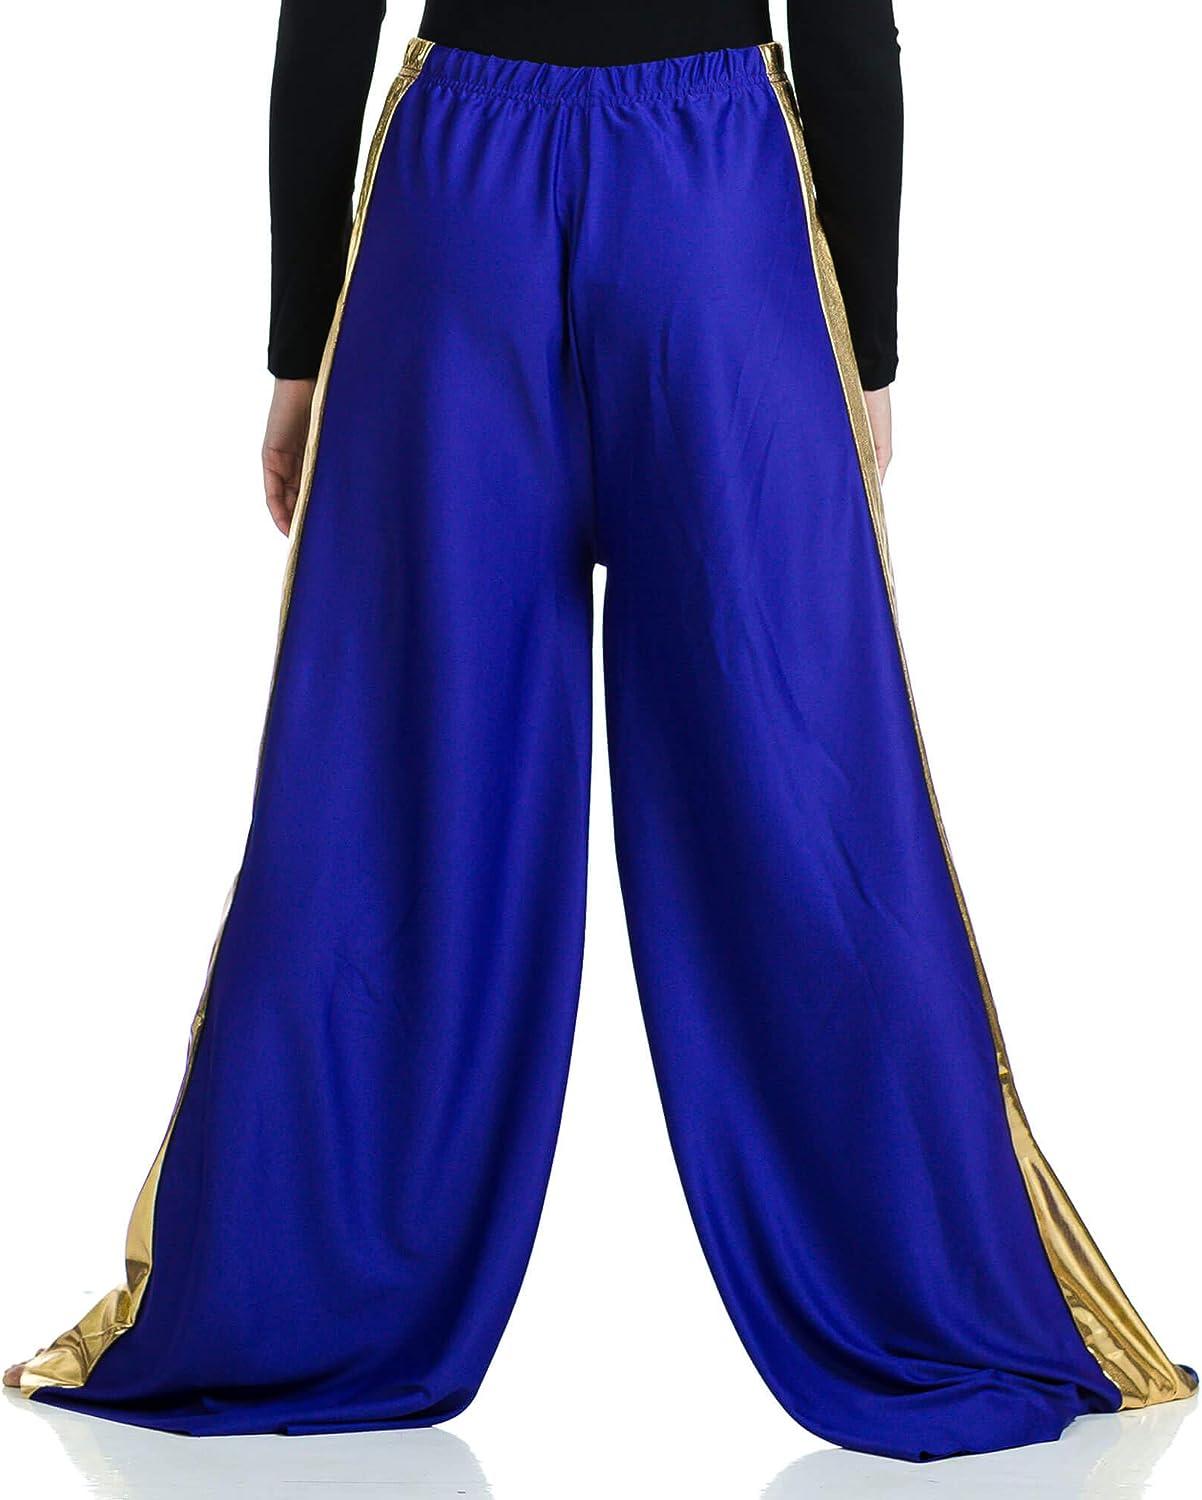 HANIFA sultan pants